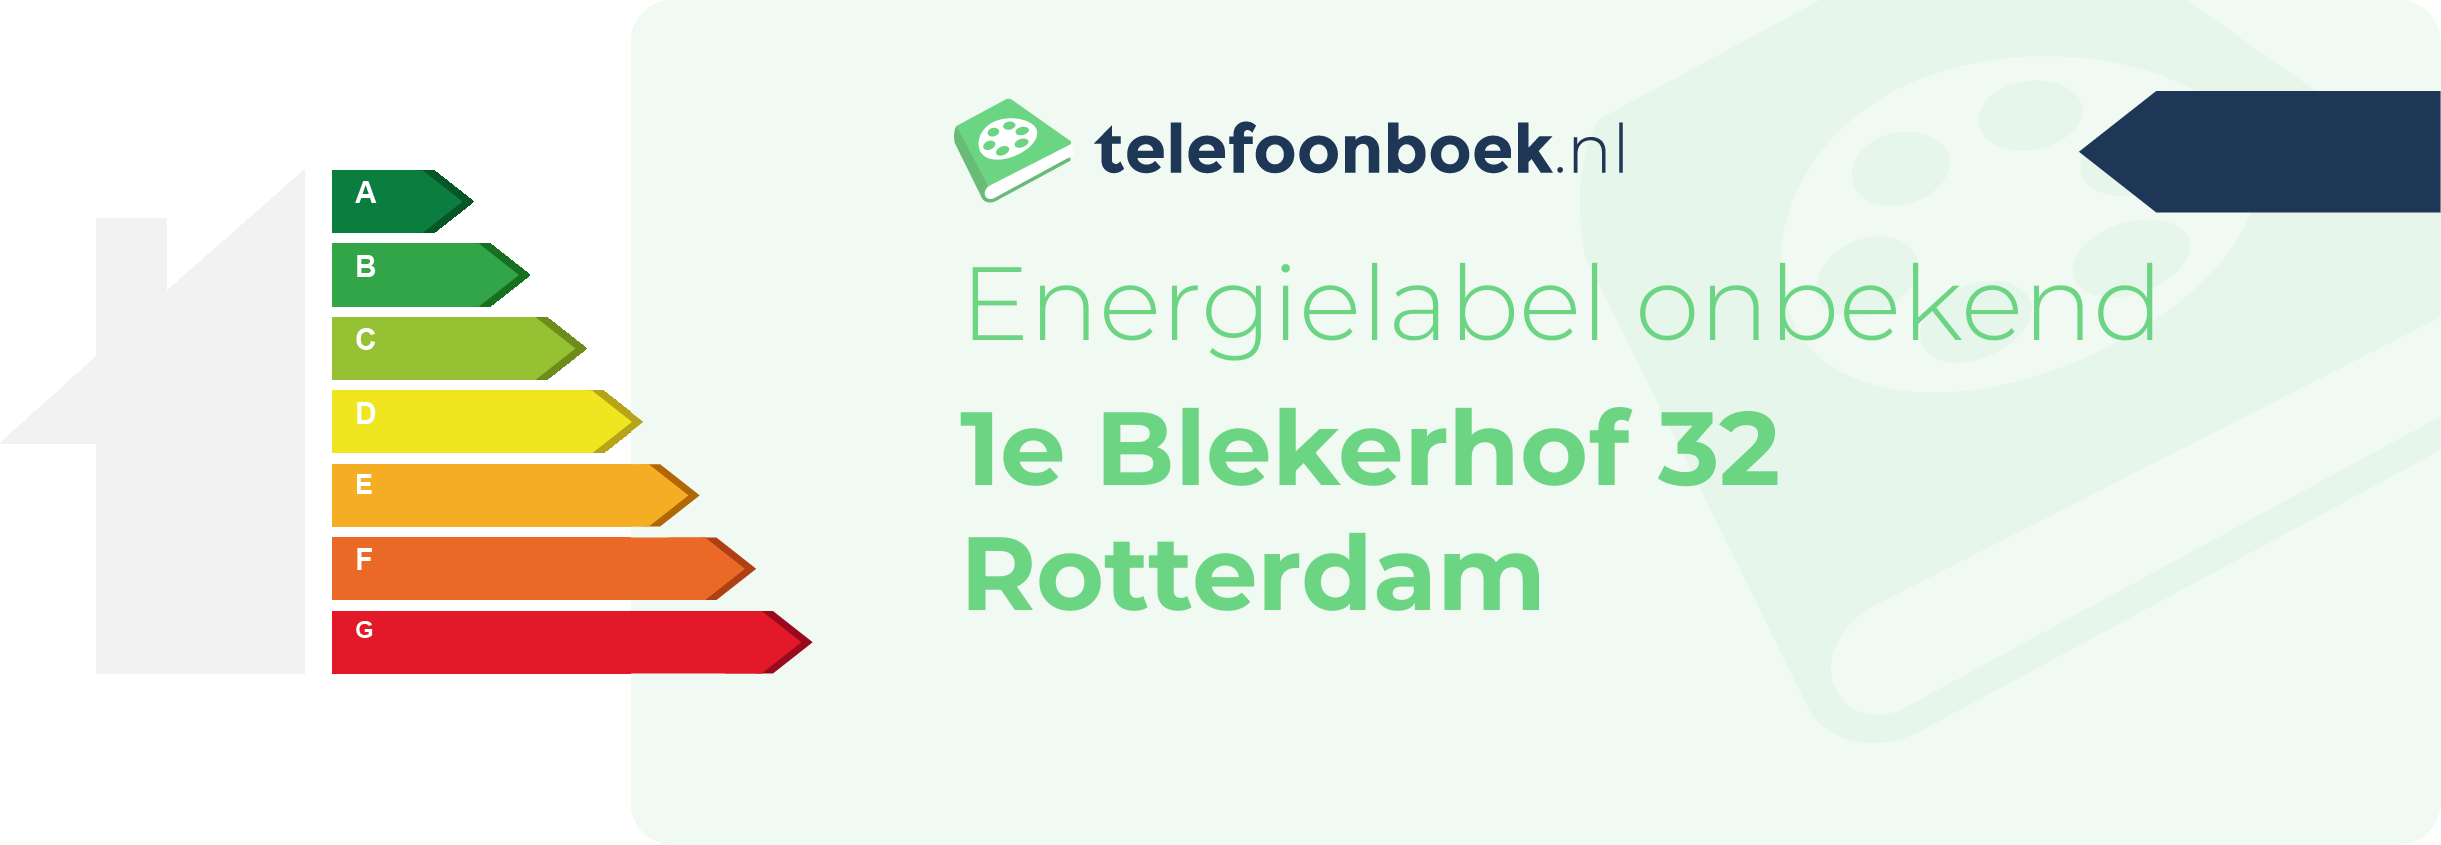 Energielabel 1e Blekerhof 32 Rotterdam